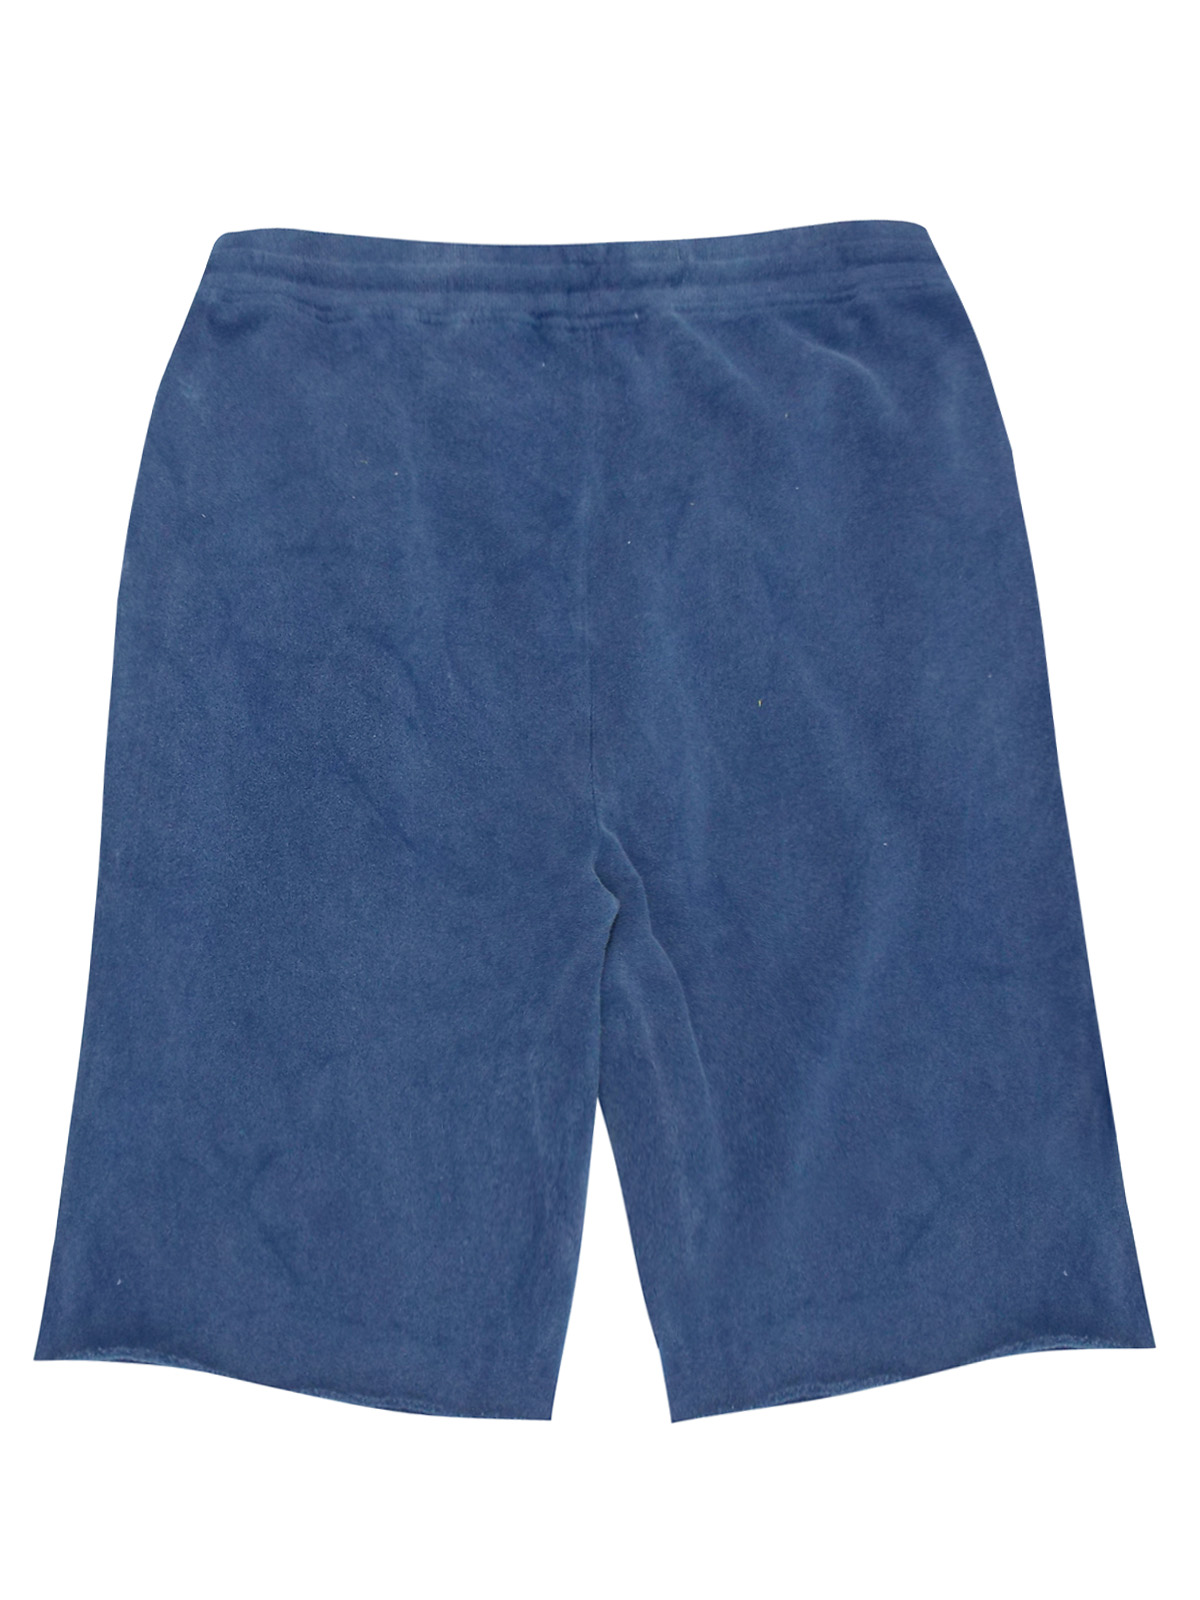 Jacamo - - Jacamo BLUE Acid Wash Jogging Shorts - Waist Size 36/38 to 58/60